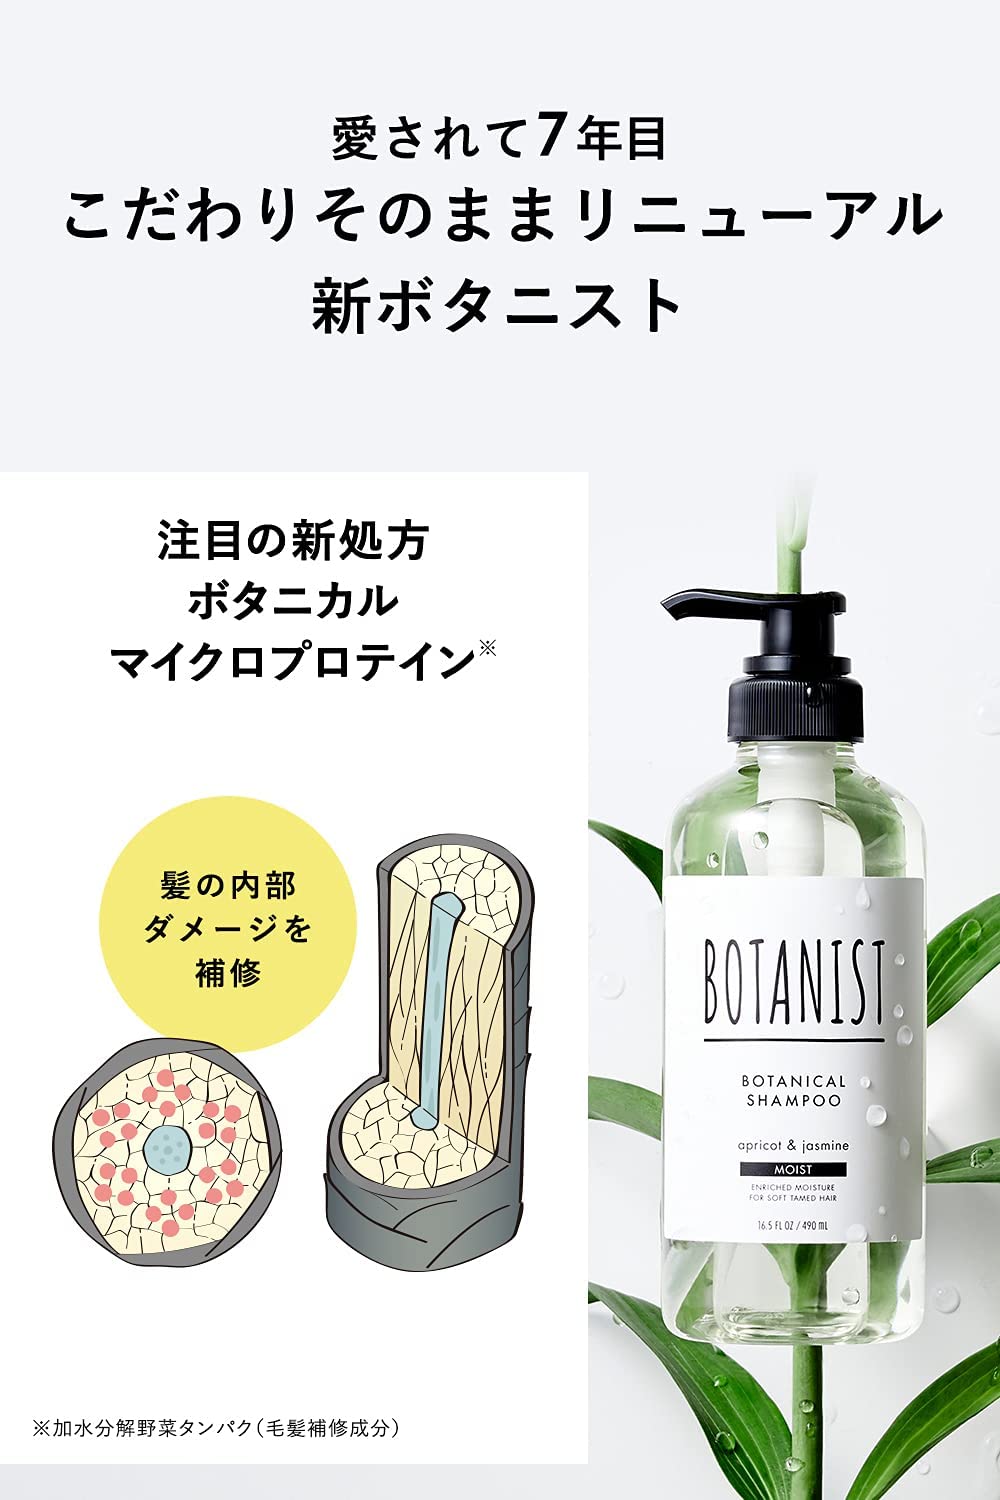 Botanical Shampoo Moist, Refill